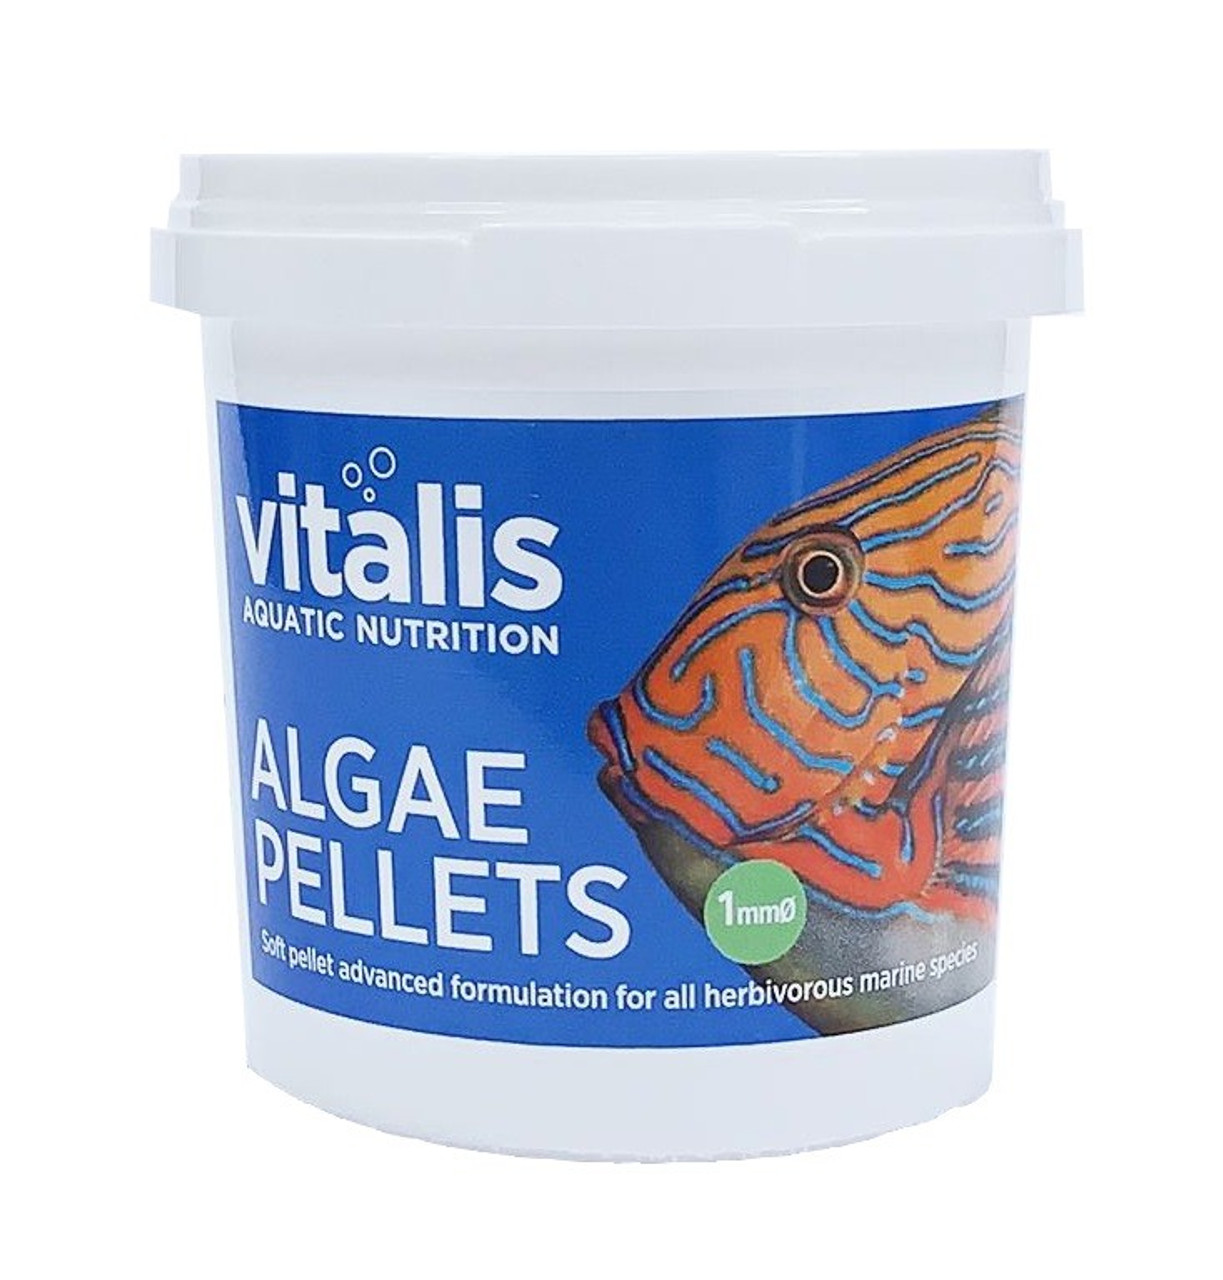 Vitalis Algae Pellets 1mm (XS) 70g